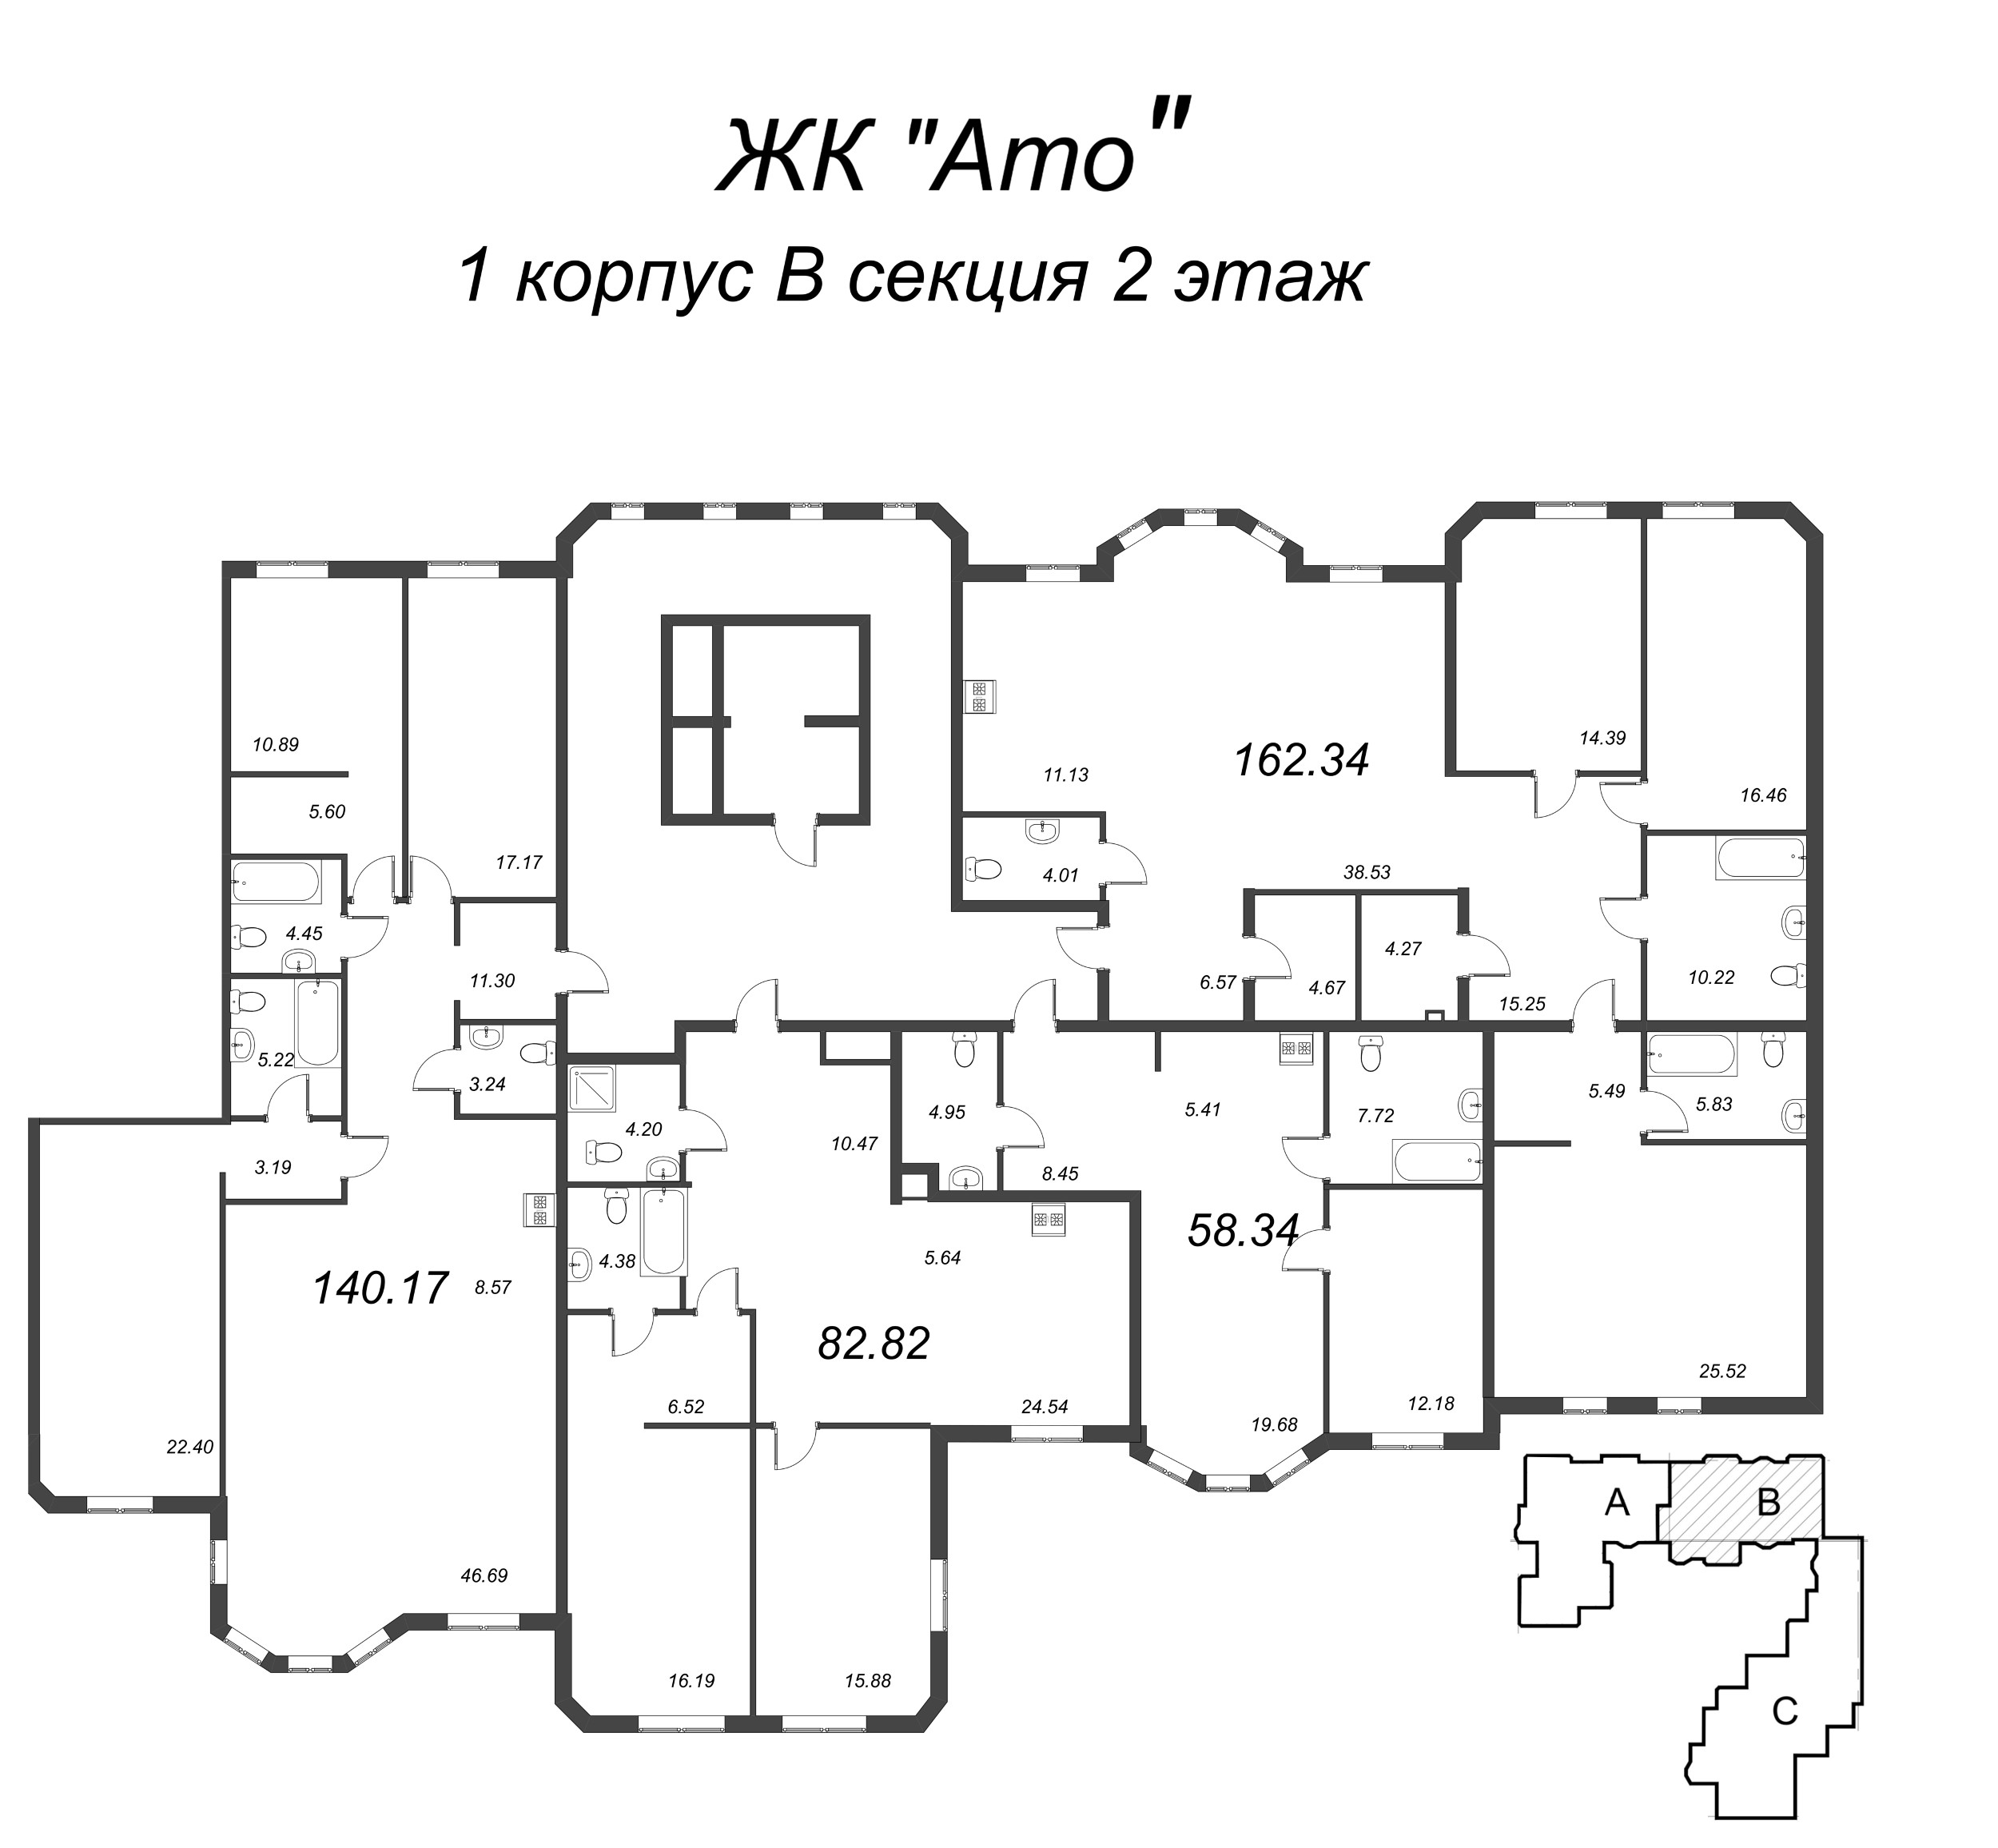 4-комнатная (Евро) квартира, 139.35 м² - планировка этажа